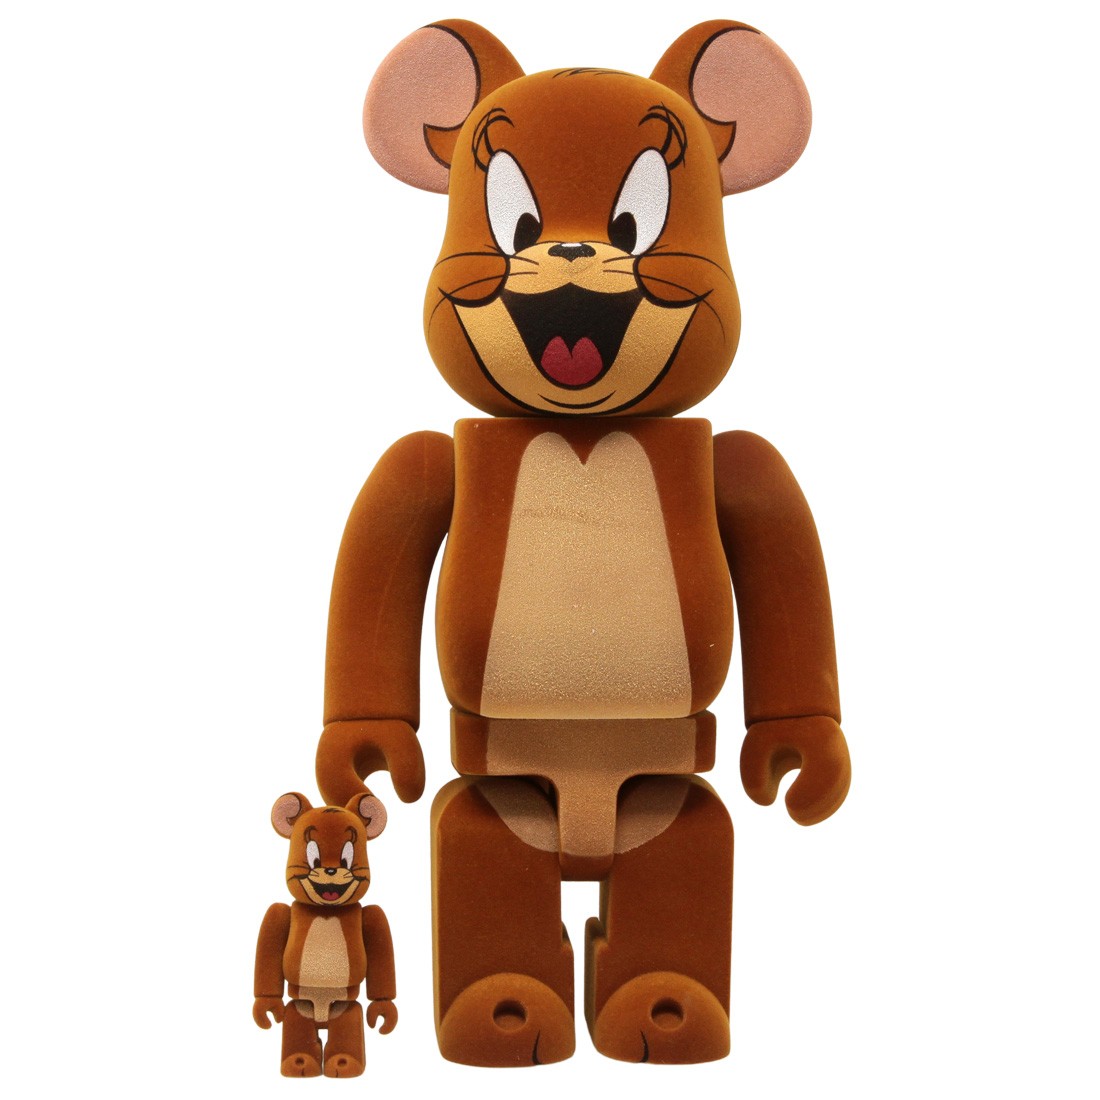 Medicom Tom and Jerry - Jerry Flocky 100% 400% Bearbrick Figure Set (brown)